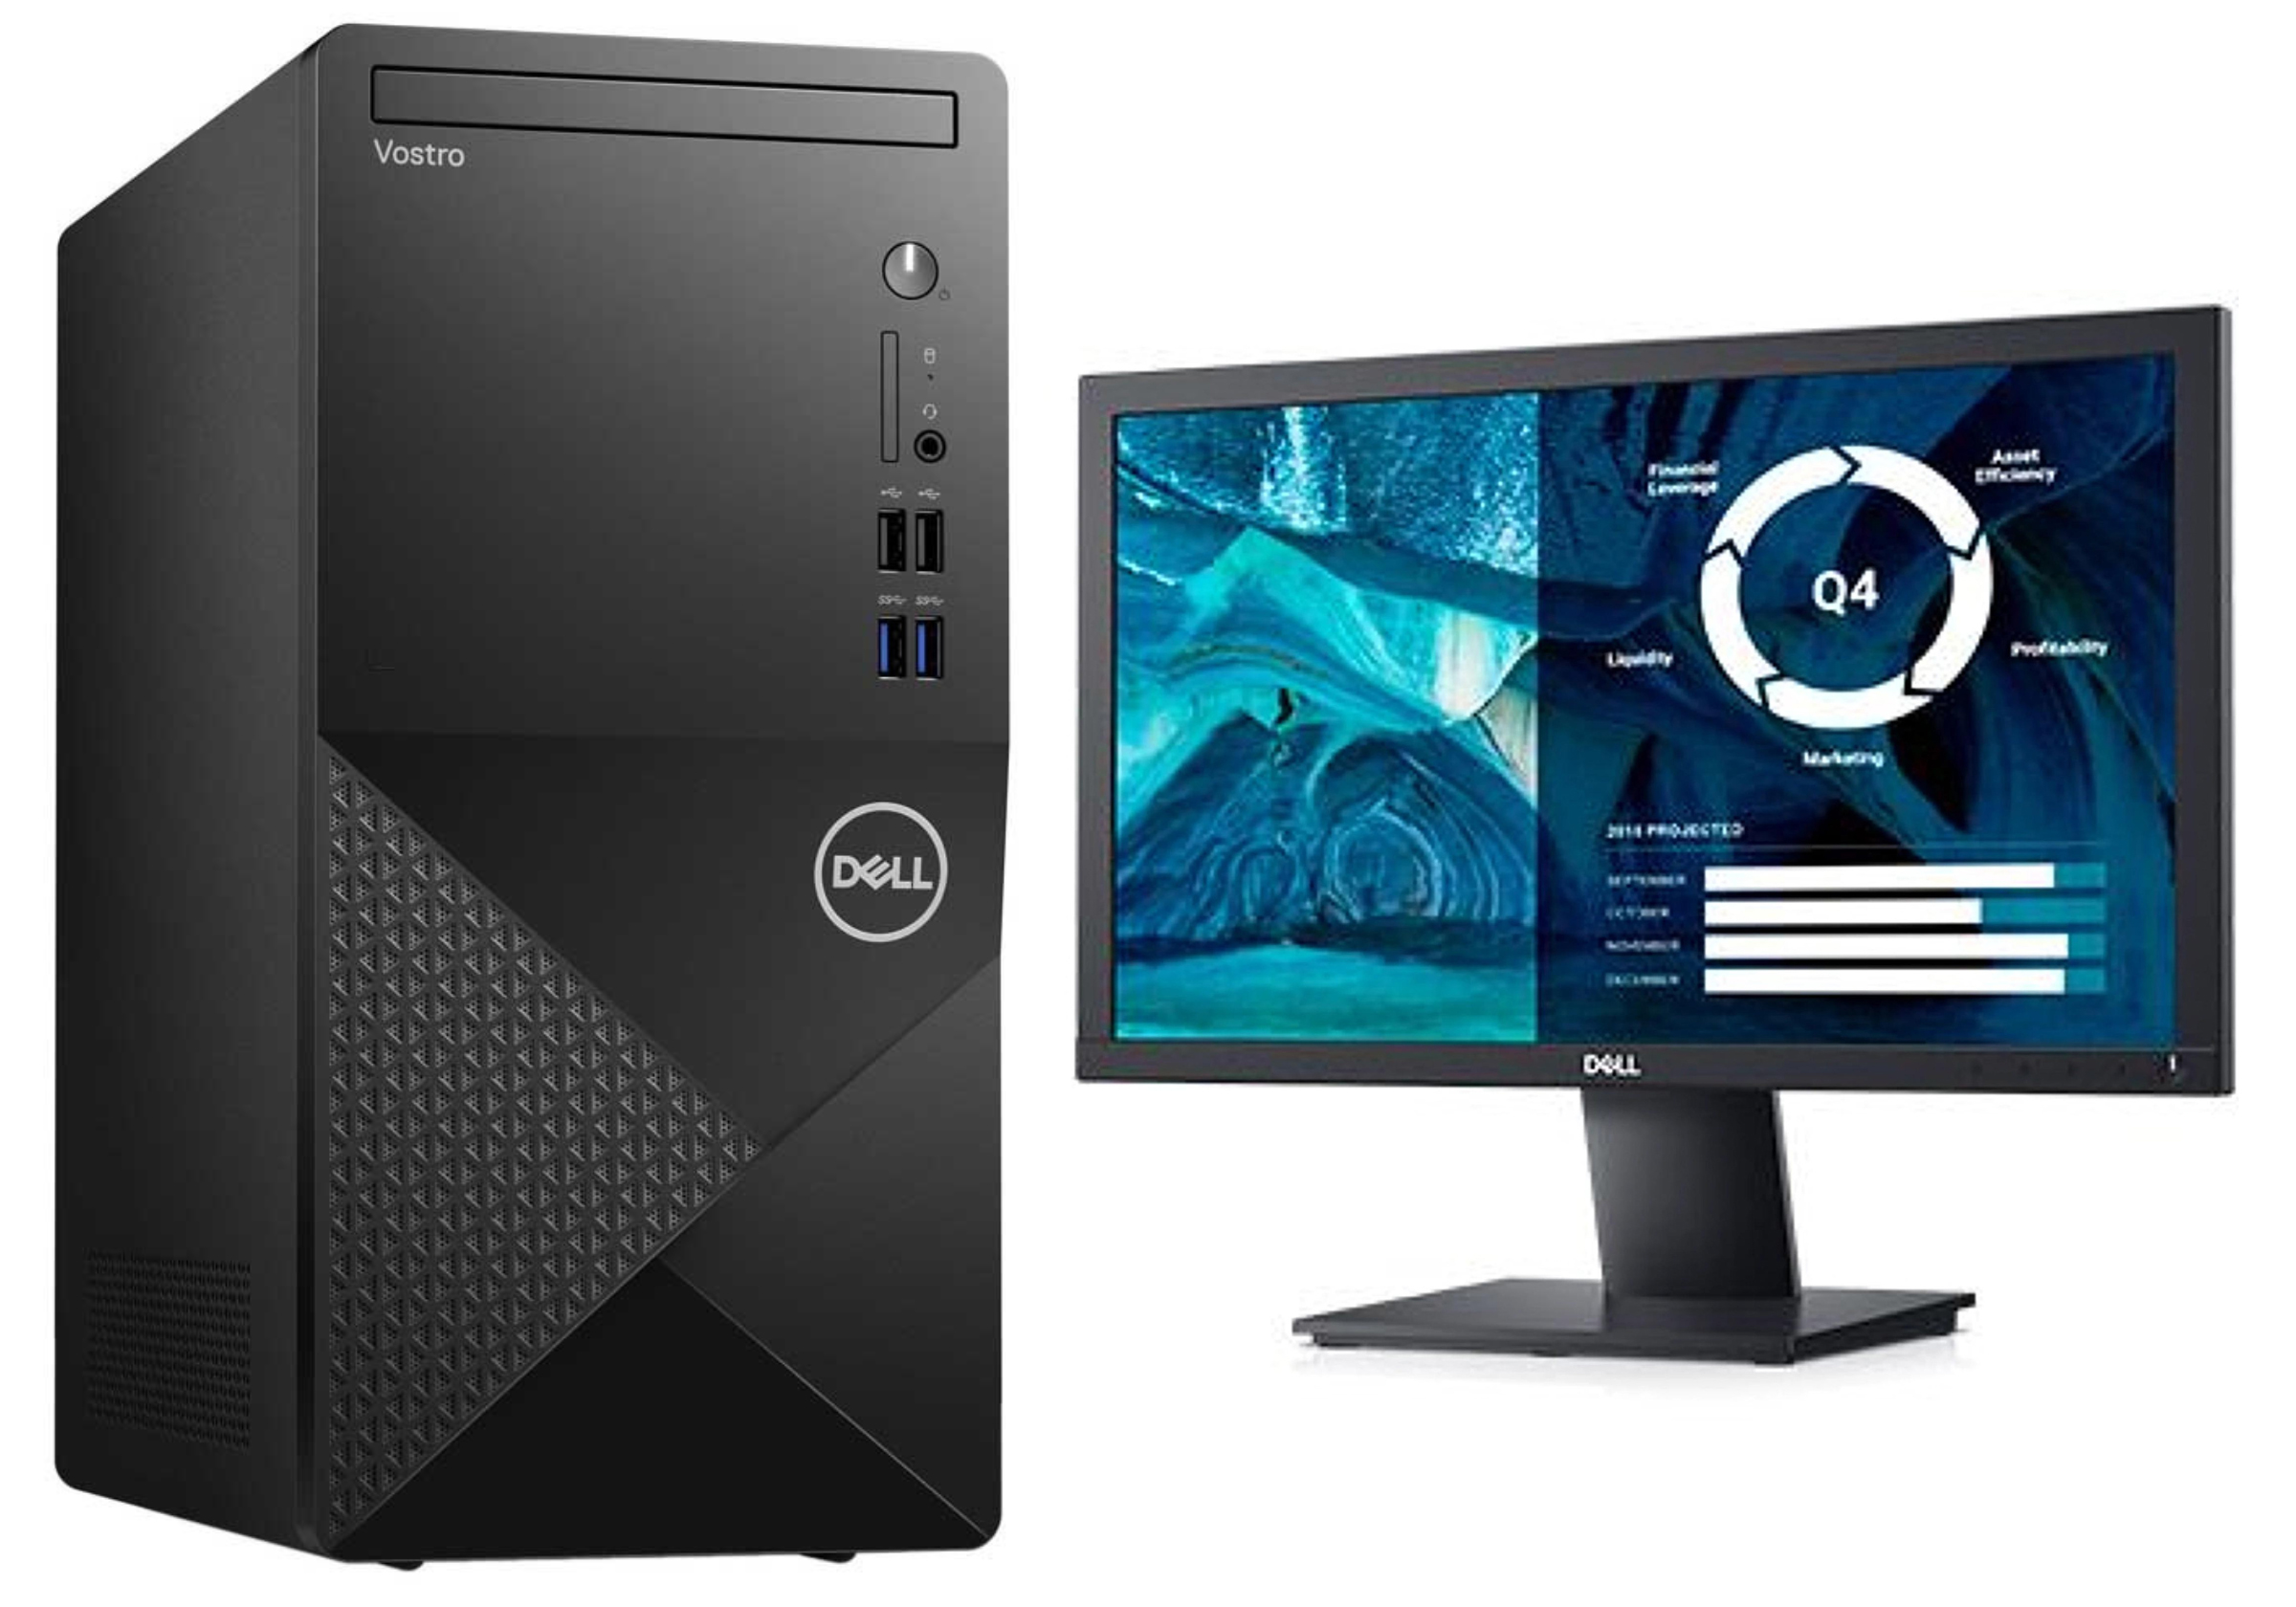 Dell Vostro Desktop 3910 